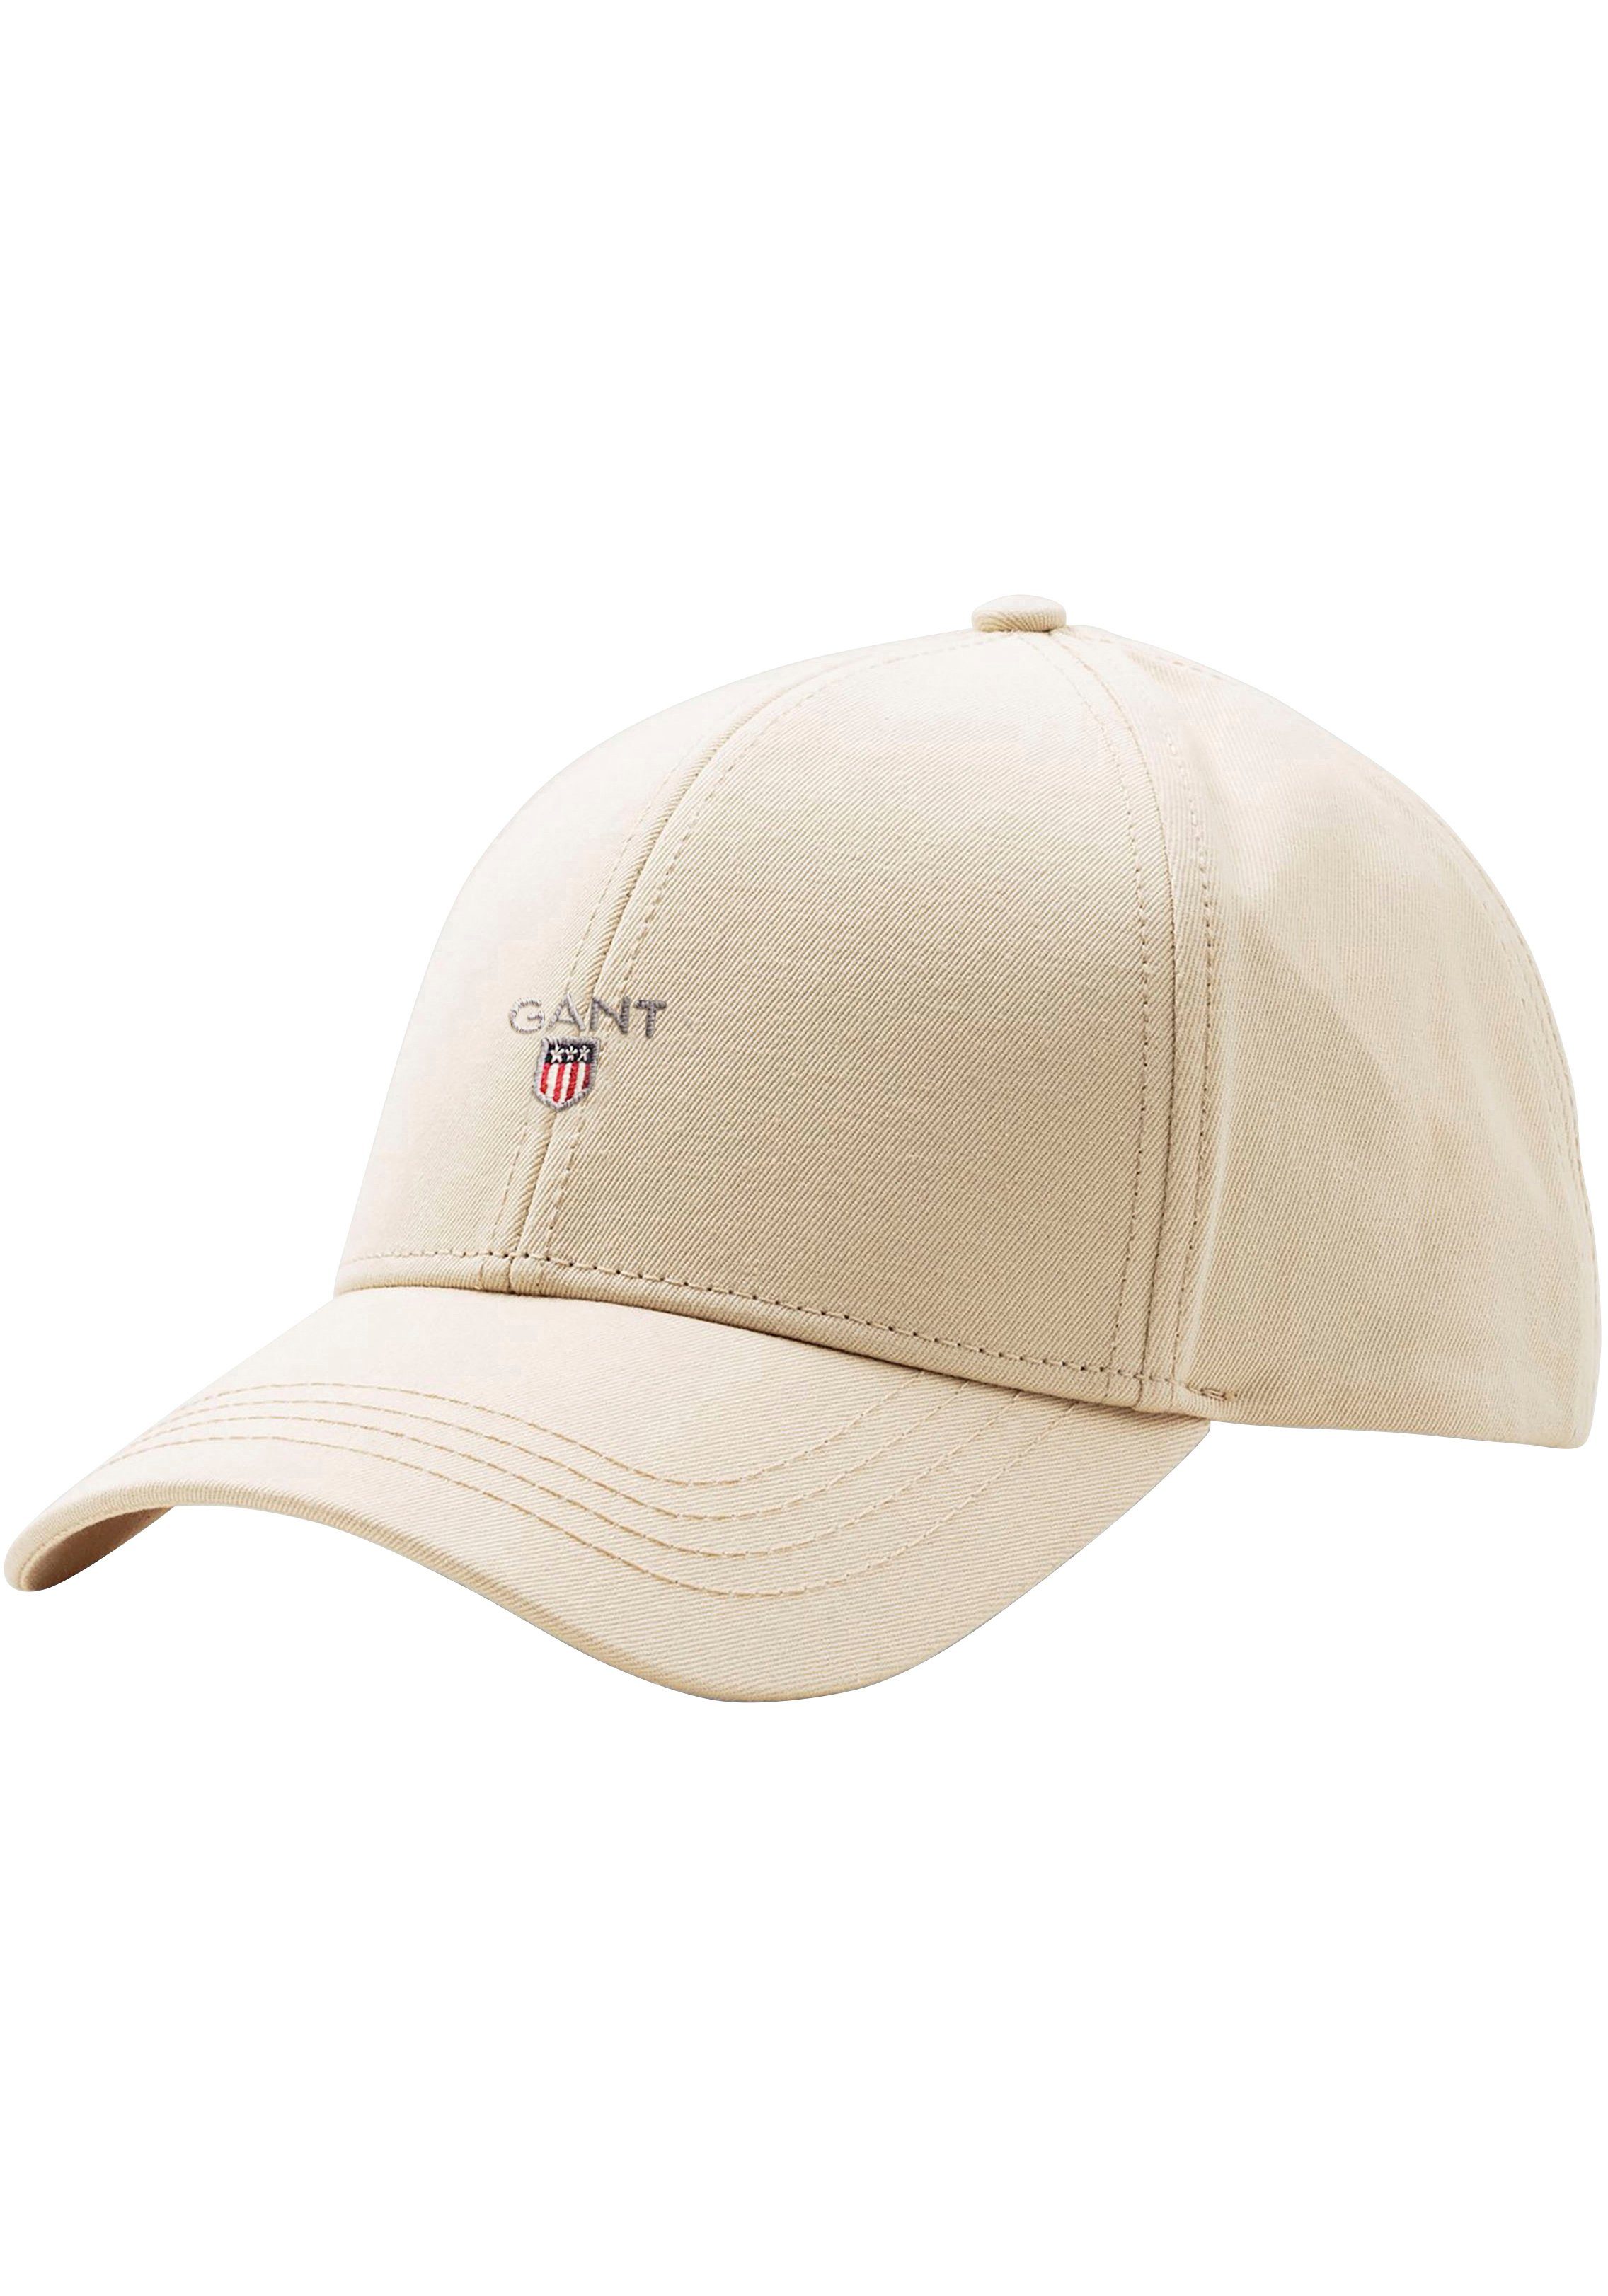 Gant Baseball Cap High Cap aus Baumwolltwill beige | Baseball Caps